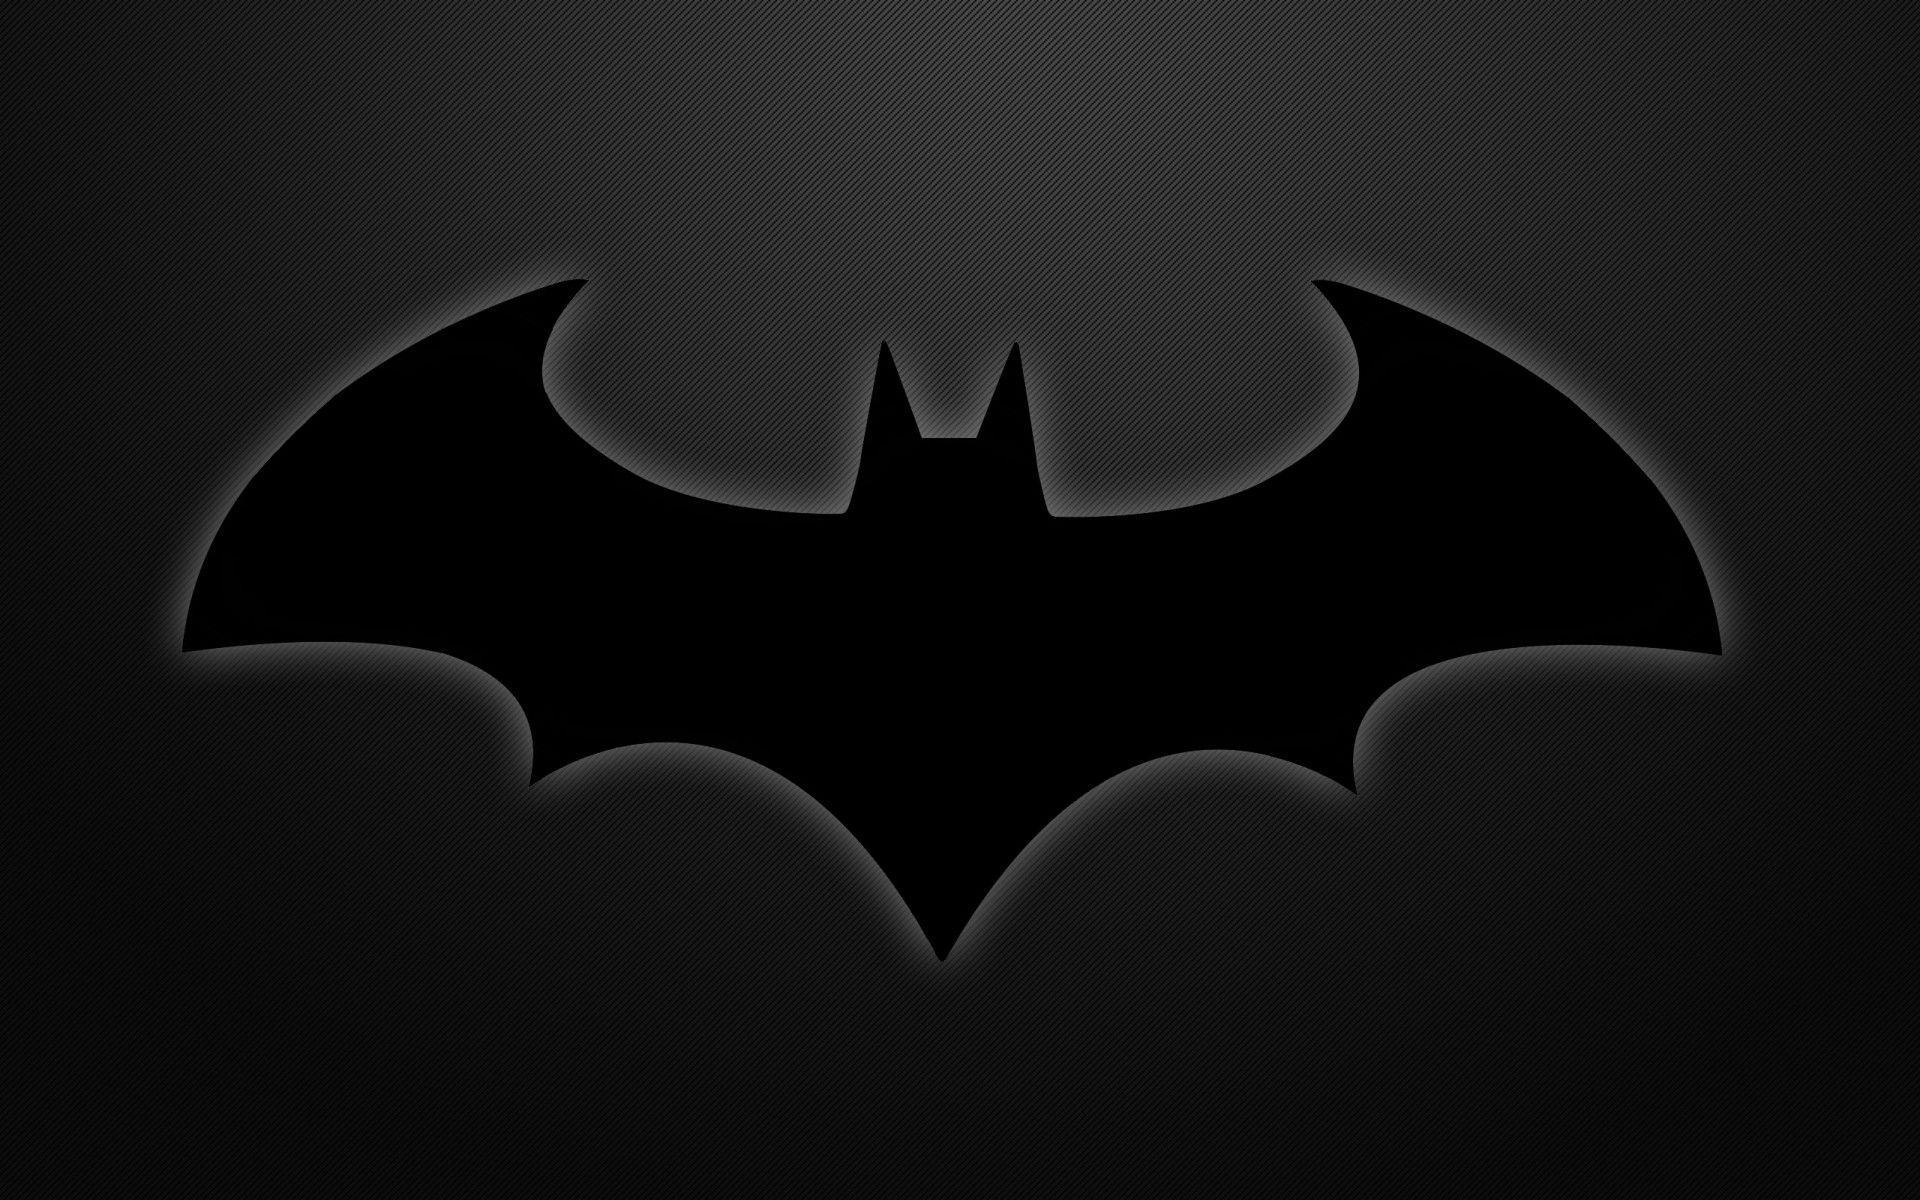 Los Mejores Fondos De Pantallas De Batman Para Tu Celular Simbolo De